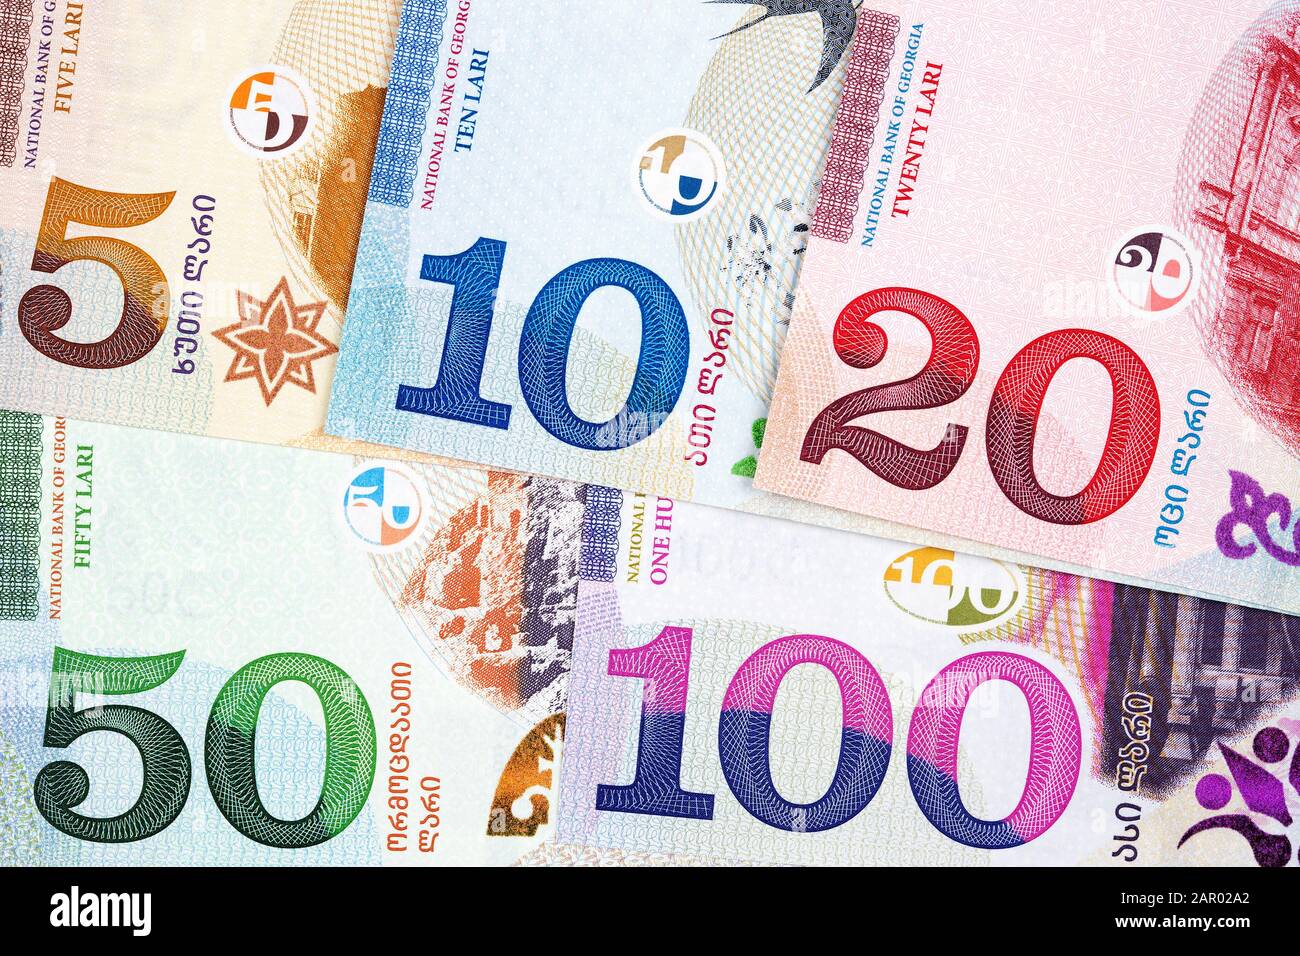 Georgian money - lari a business background Stock Photo